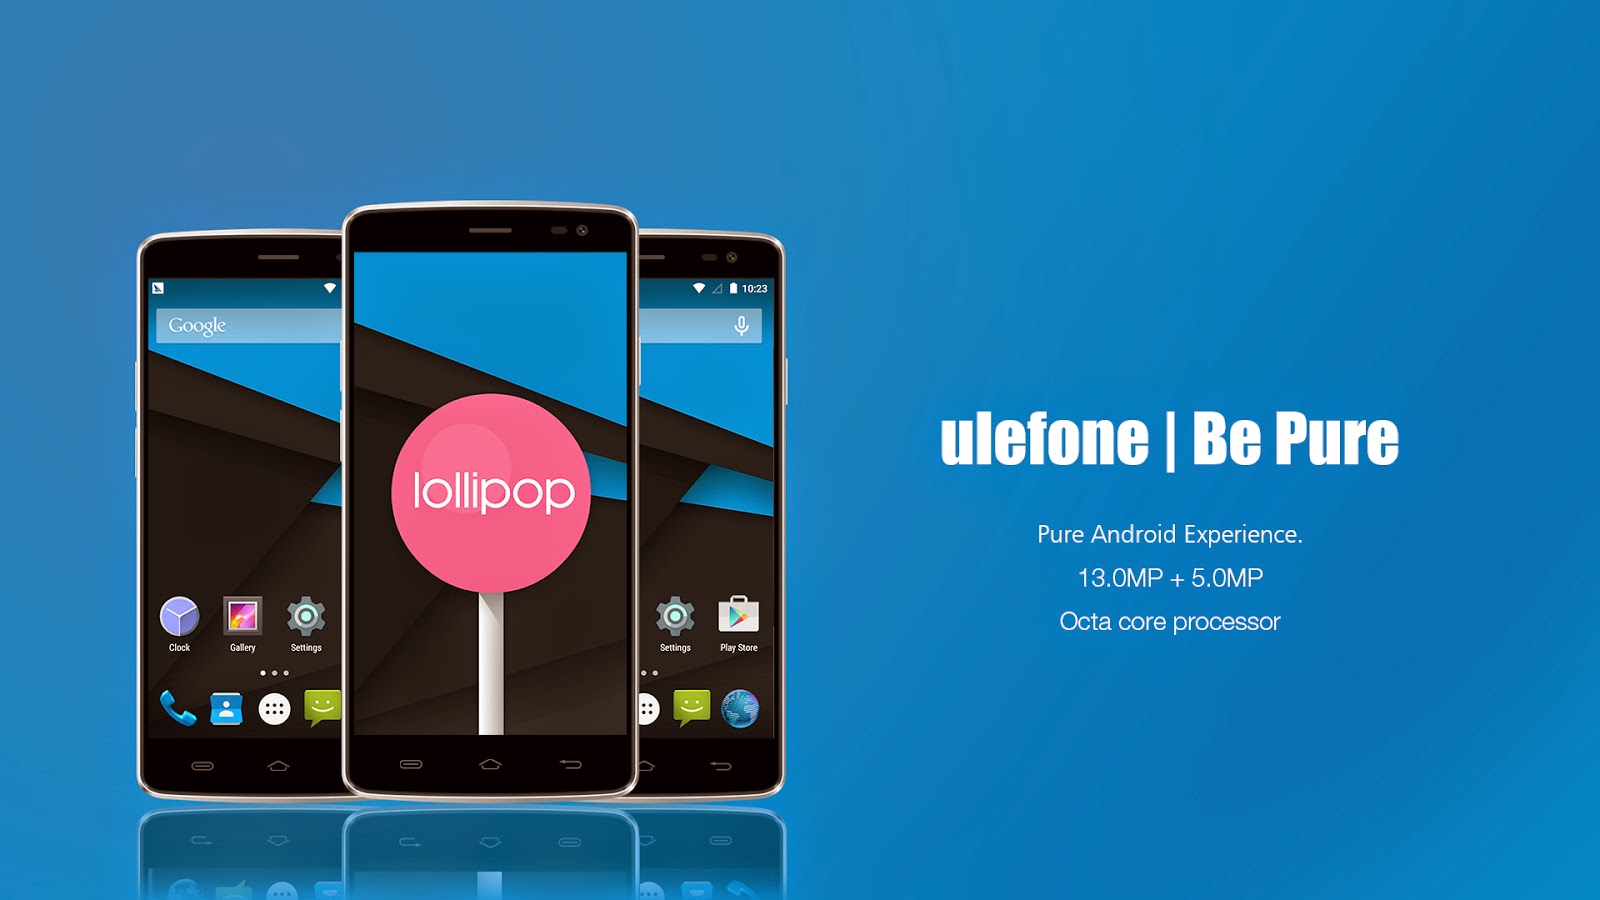 Android experience. Ulefone андроид. Чистый Android. Octa Core. Логотип Ulefone.